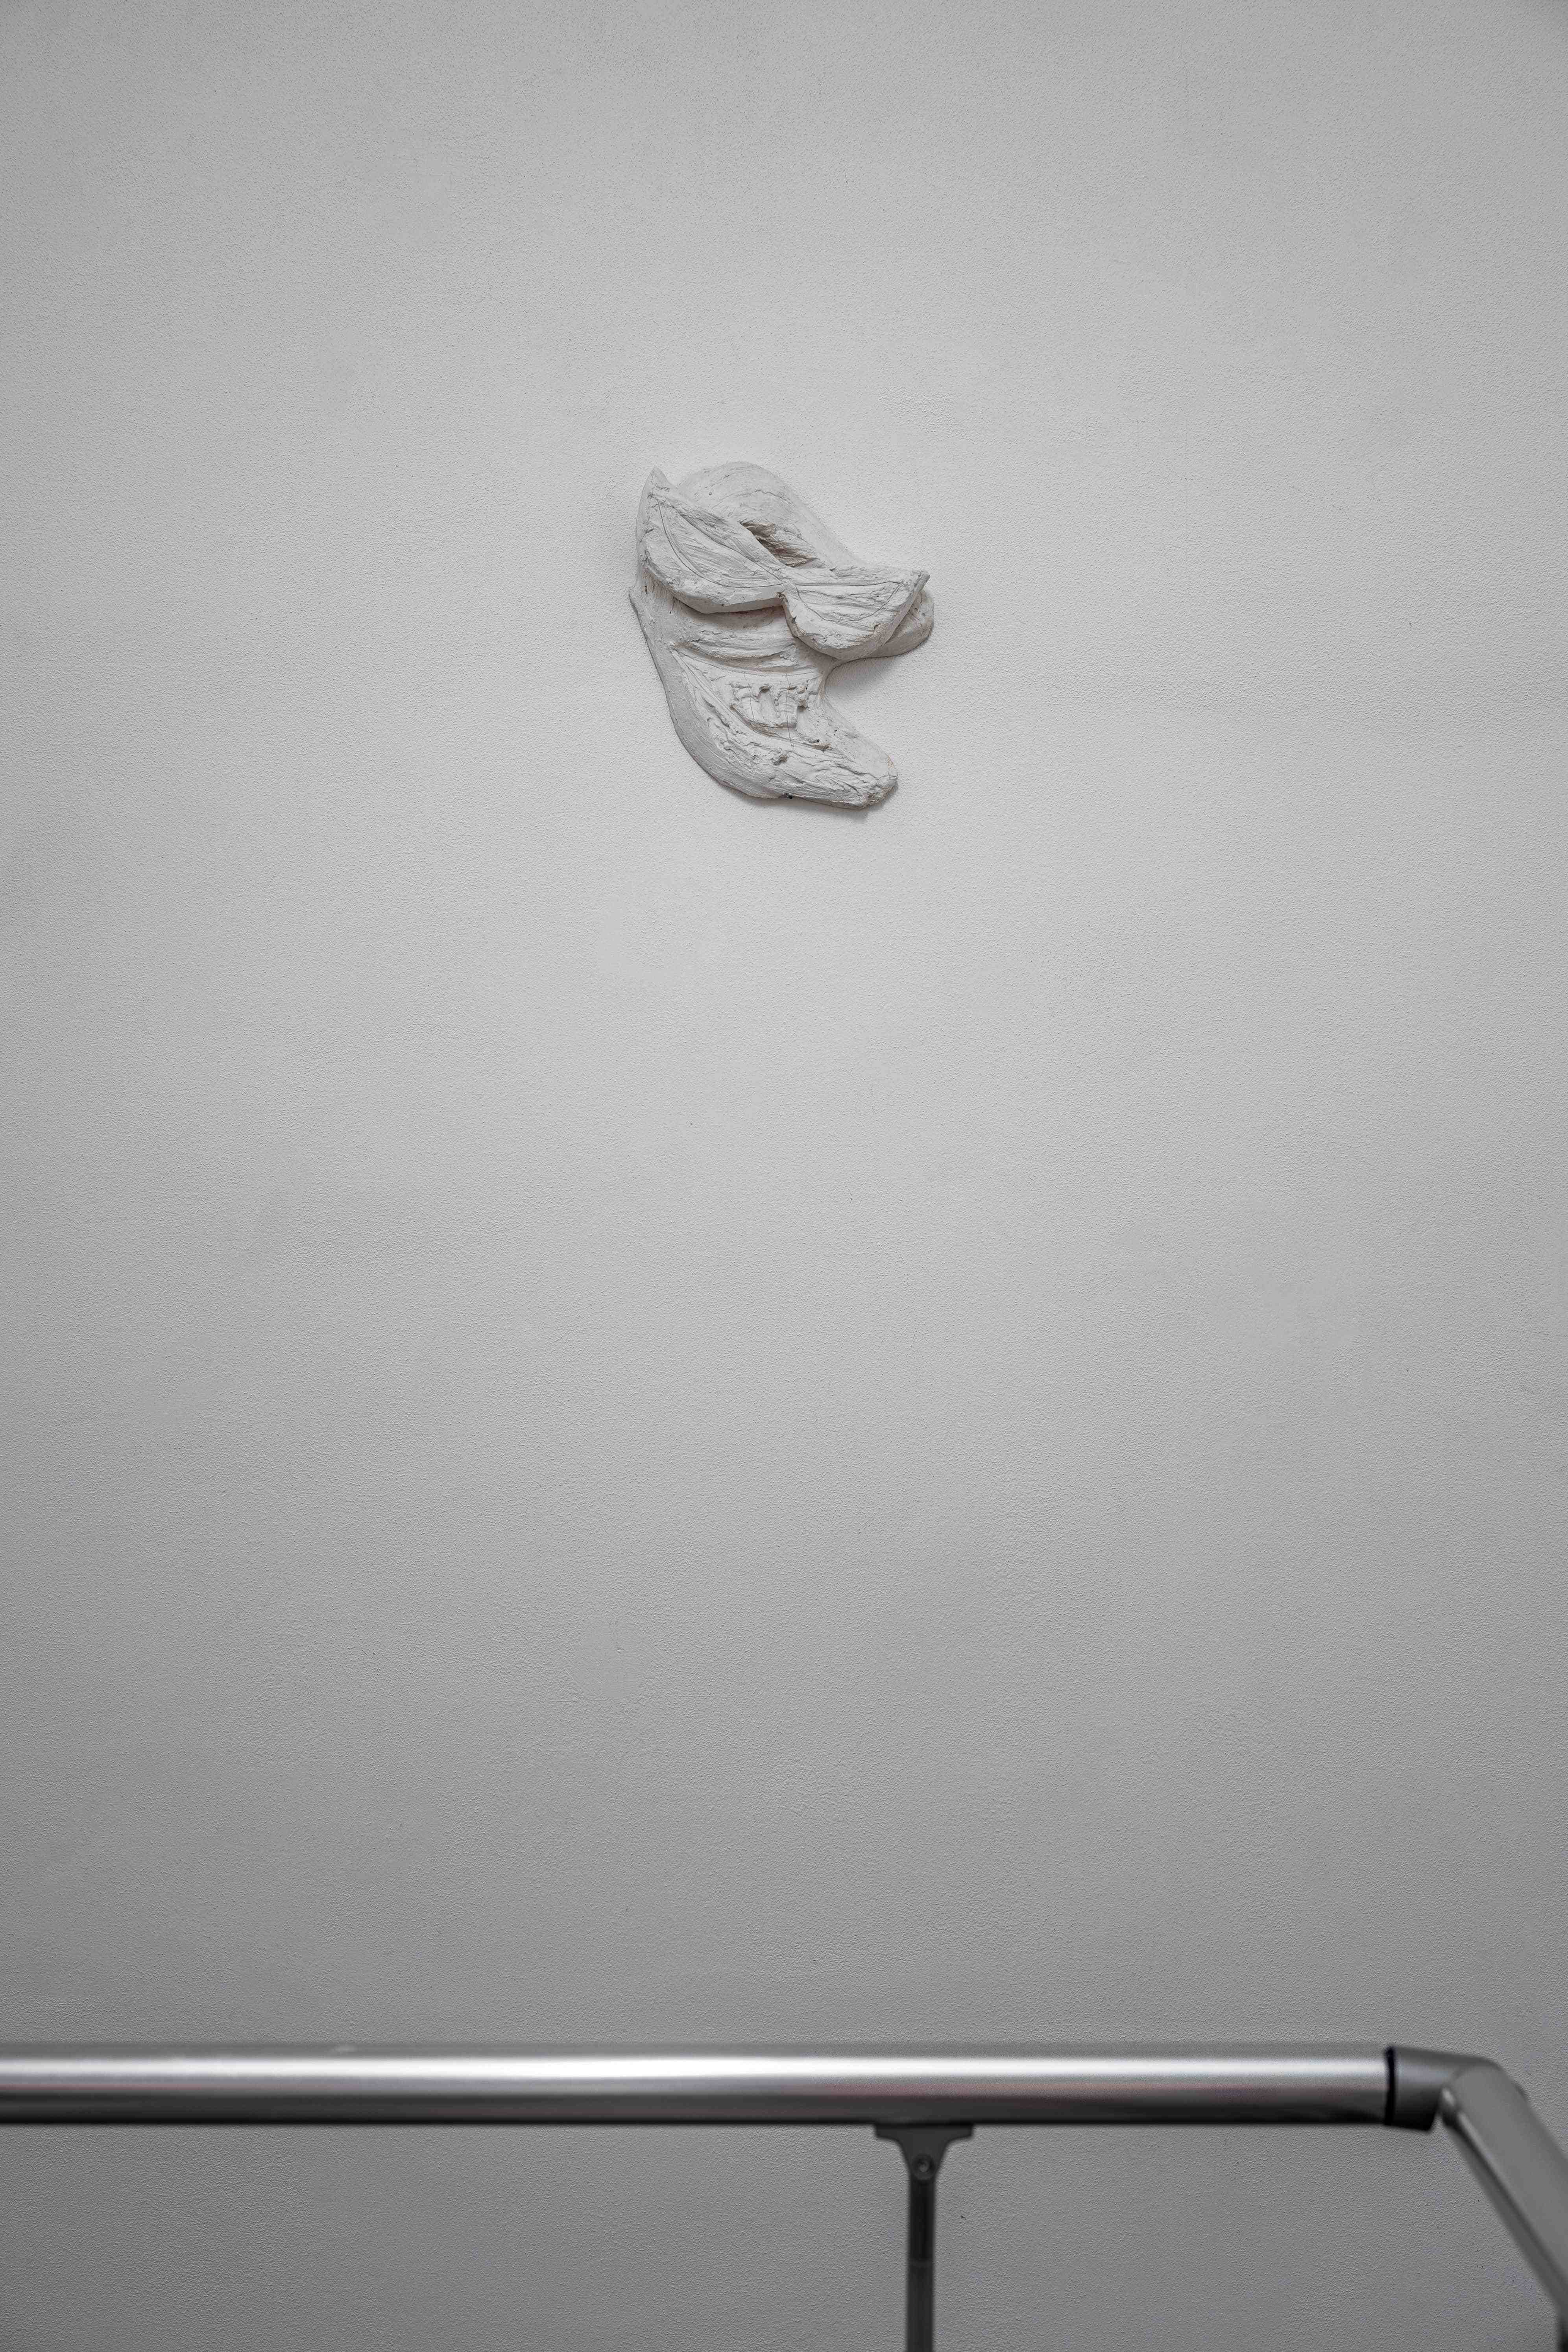 Self confrontation, Plaster, 28 x 26 cm, 2022